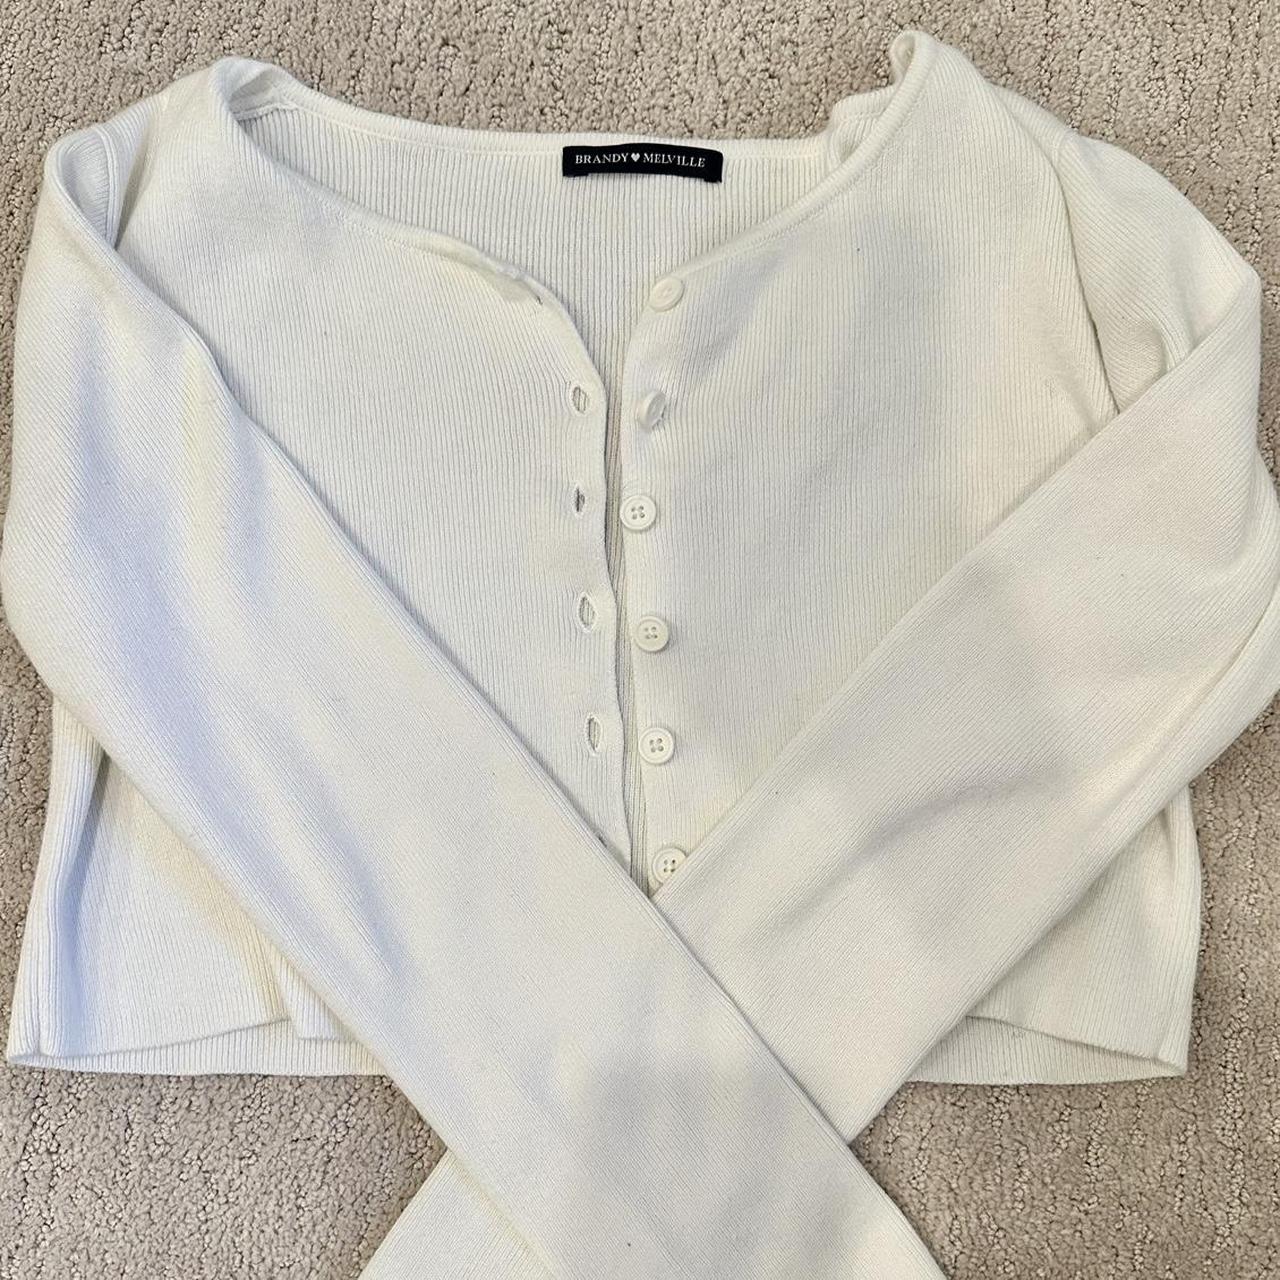 Brandy Melville Women's White Cardigan | Depop